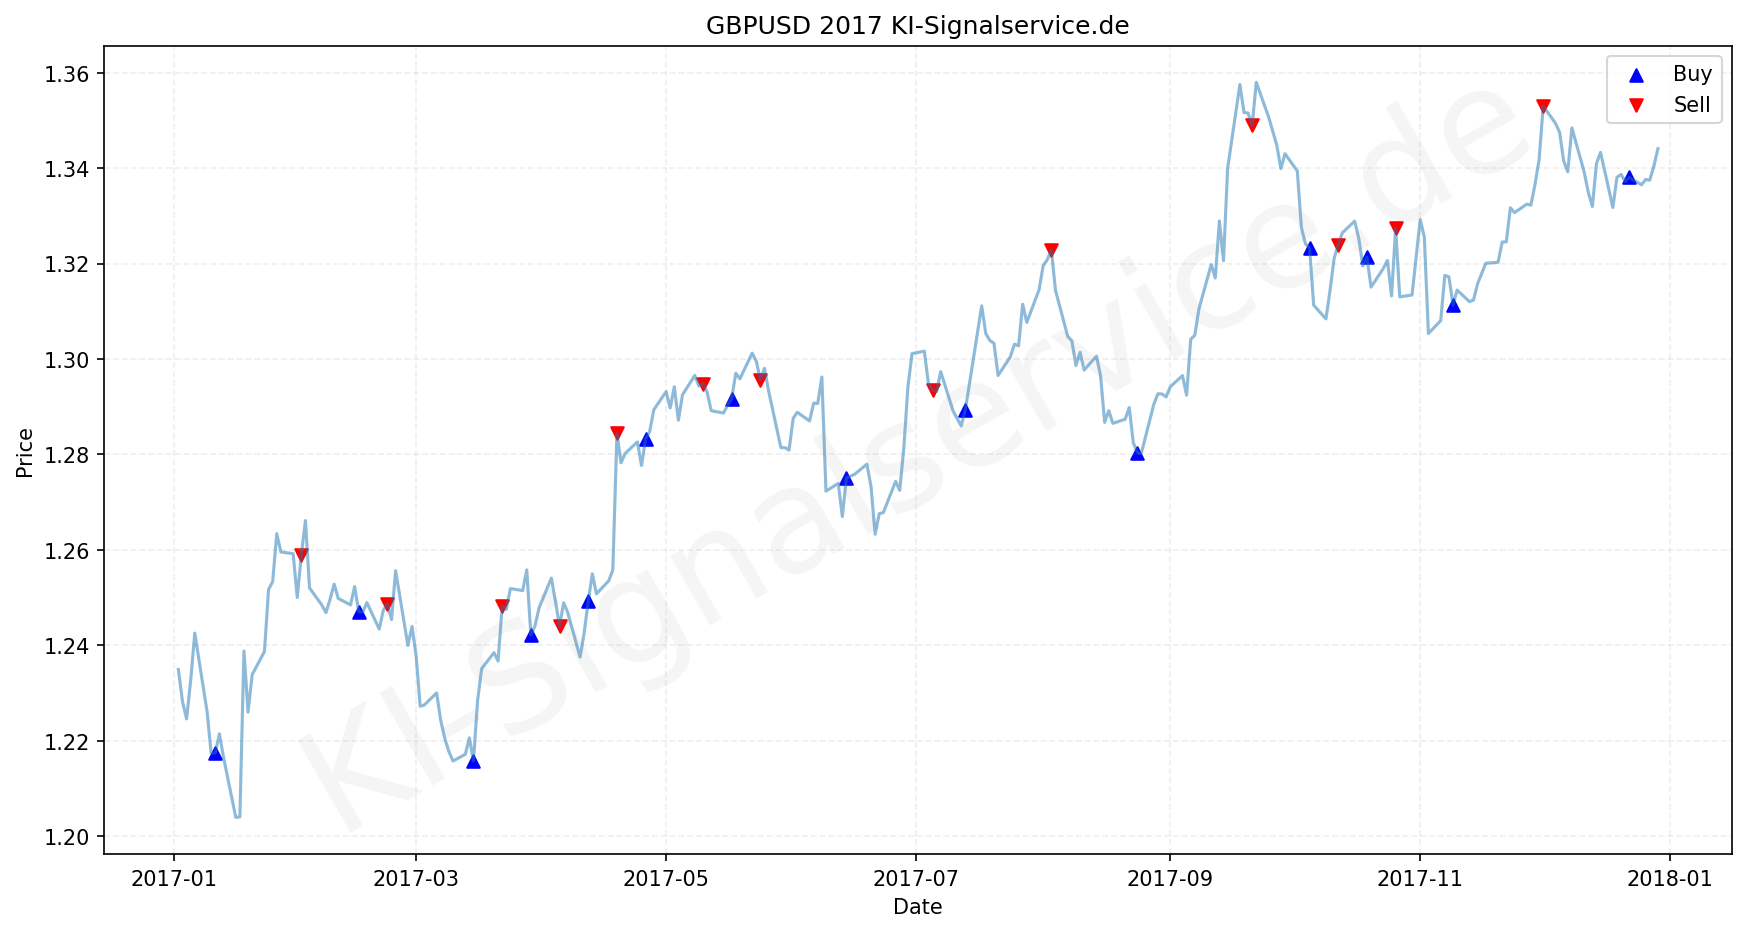 GBPUSD Chart - KI Tradingsignale 2017